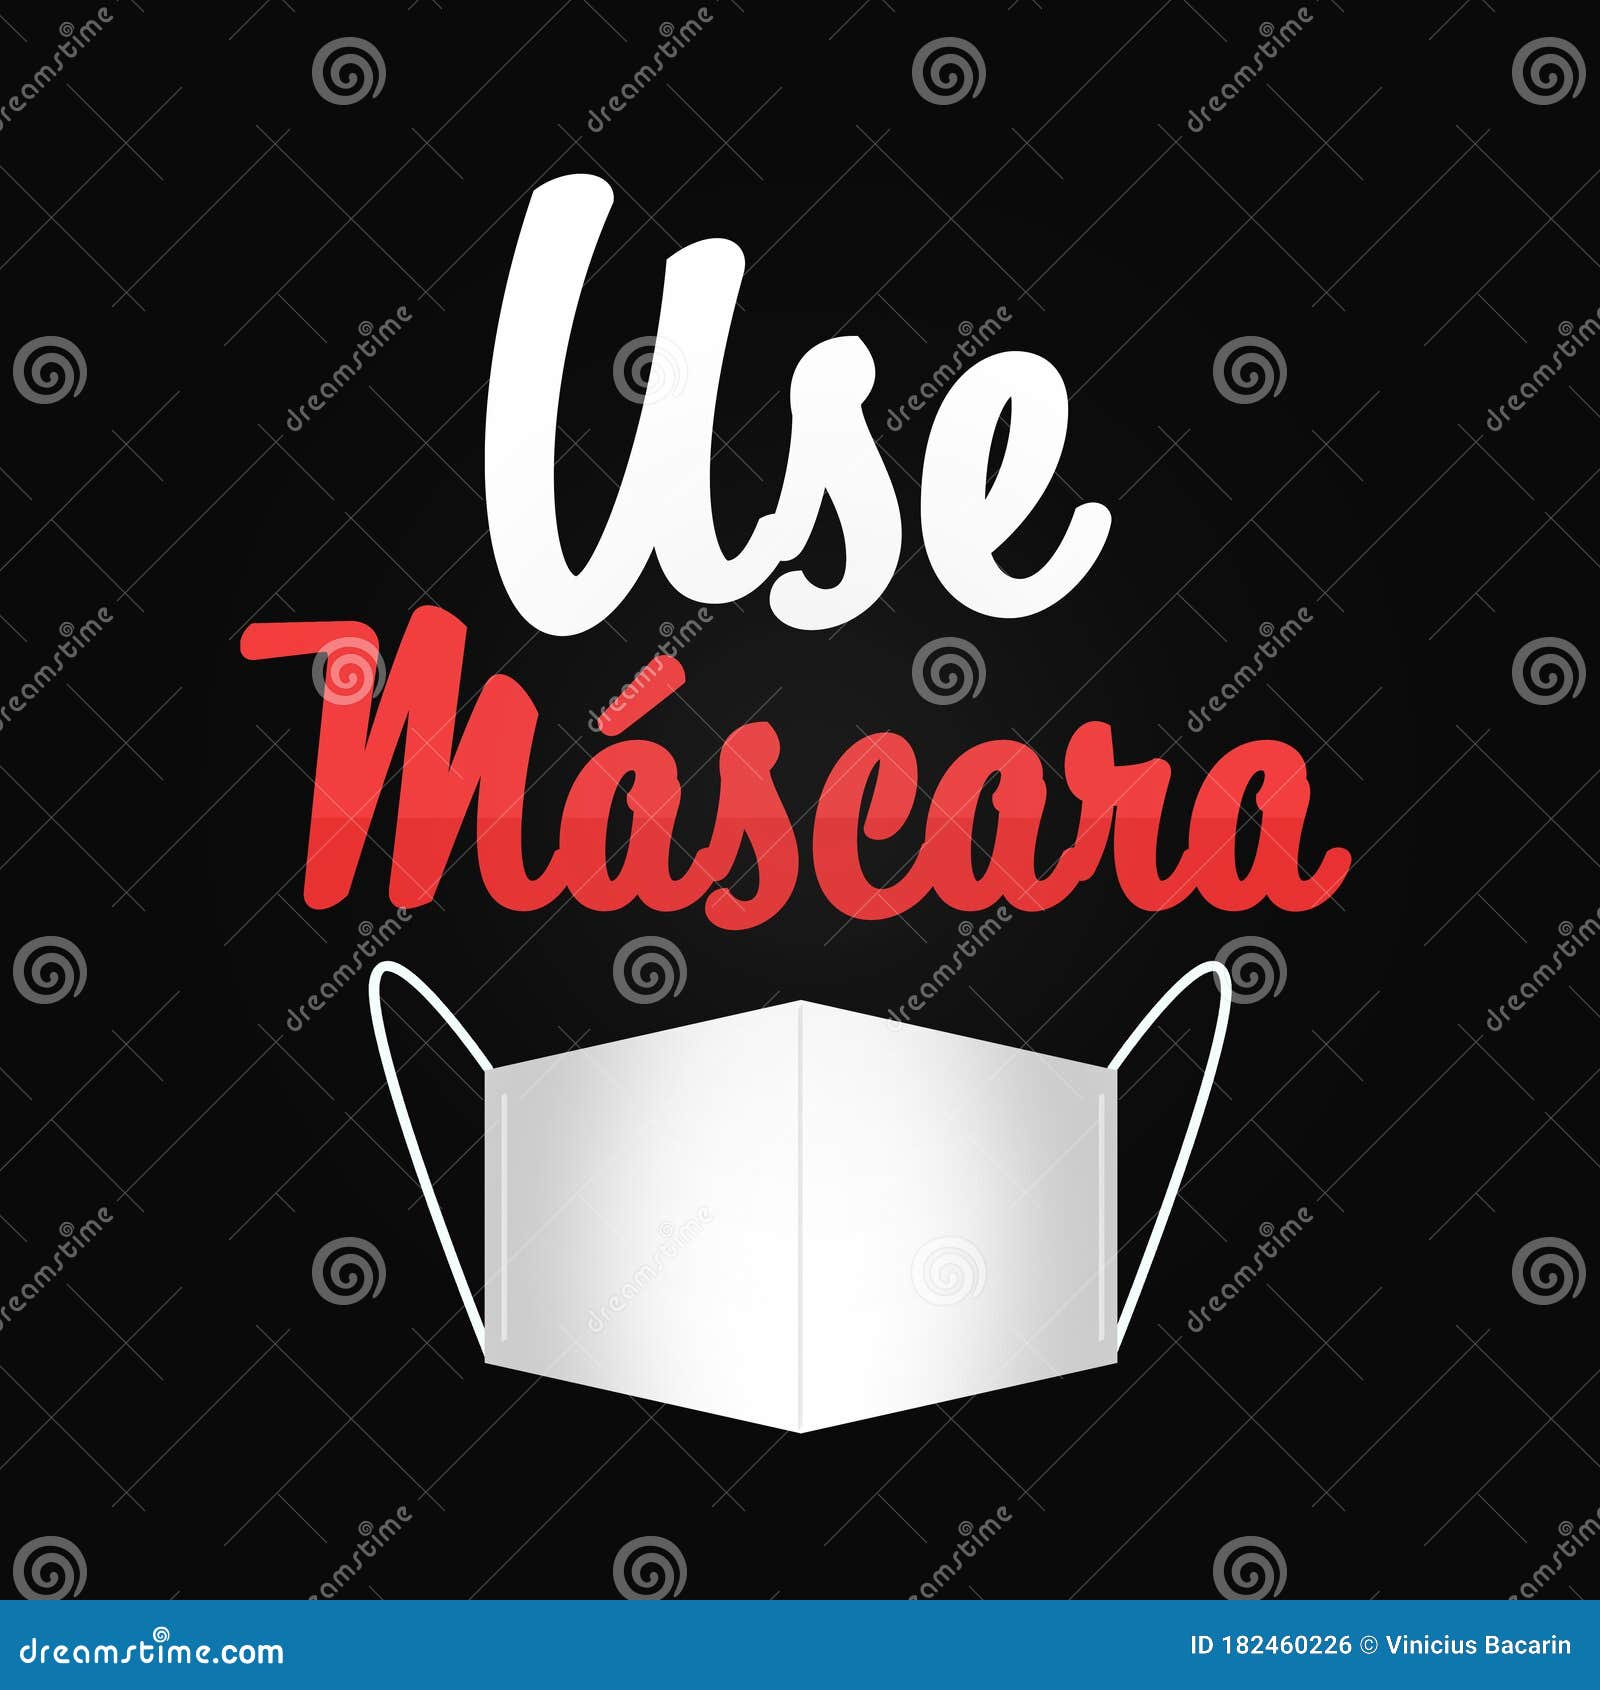 use mÃÂ¡scara, wear mask